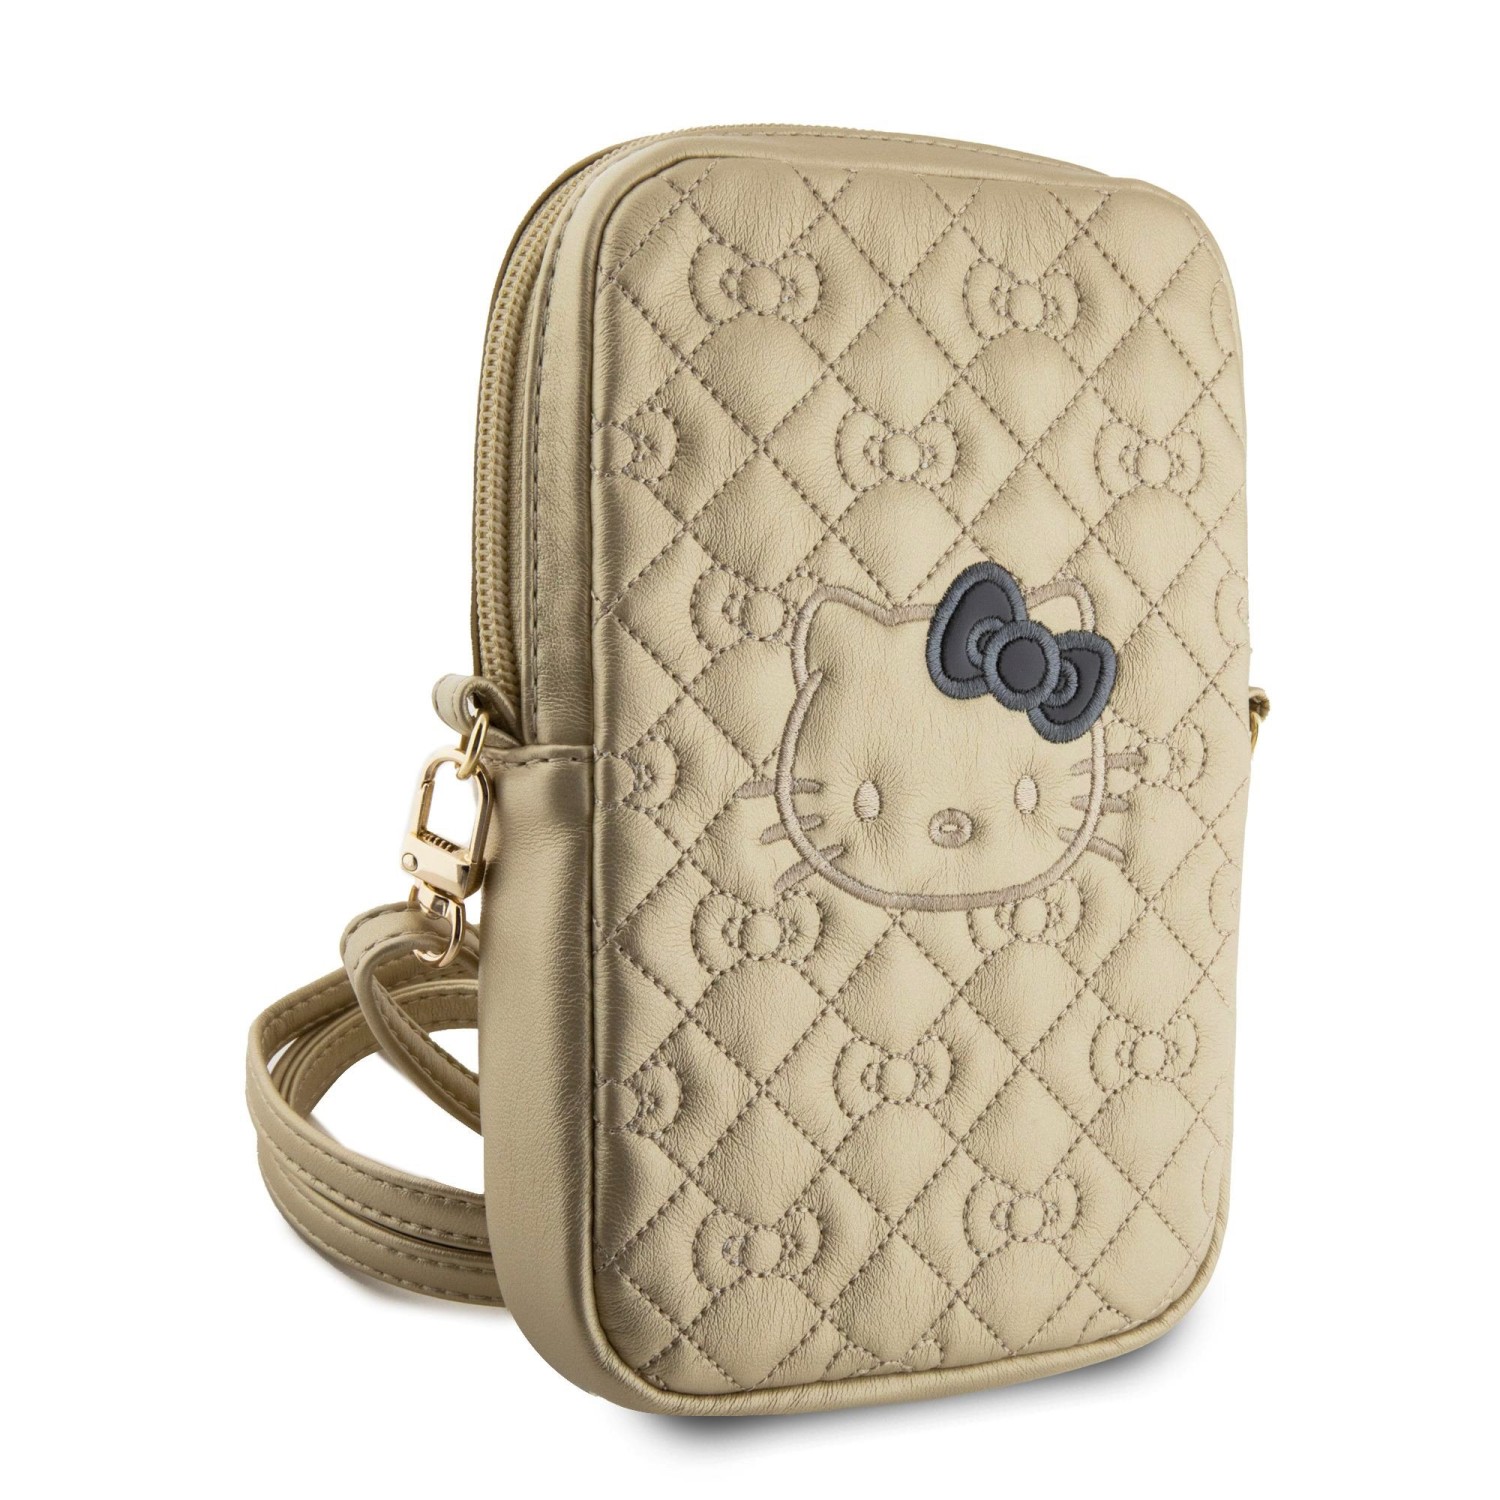 Kožená taška Hello Kitty PU Leather Quilted Pattern Kitty Head Logo Phone Bag, gold